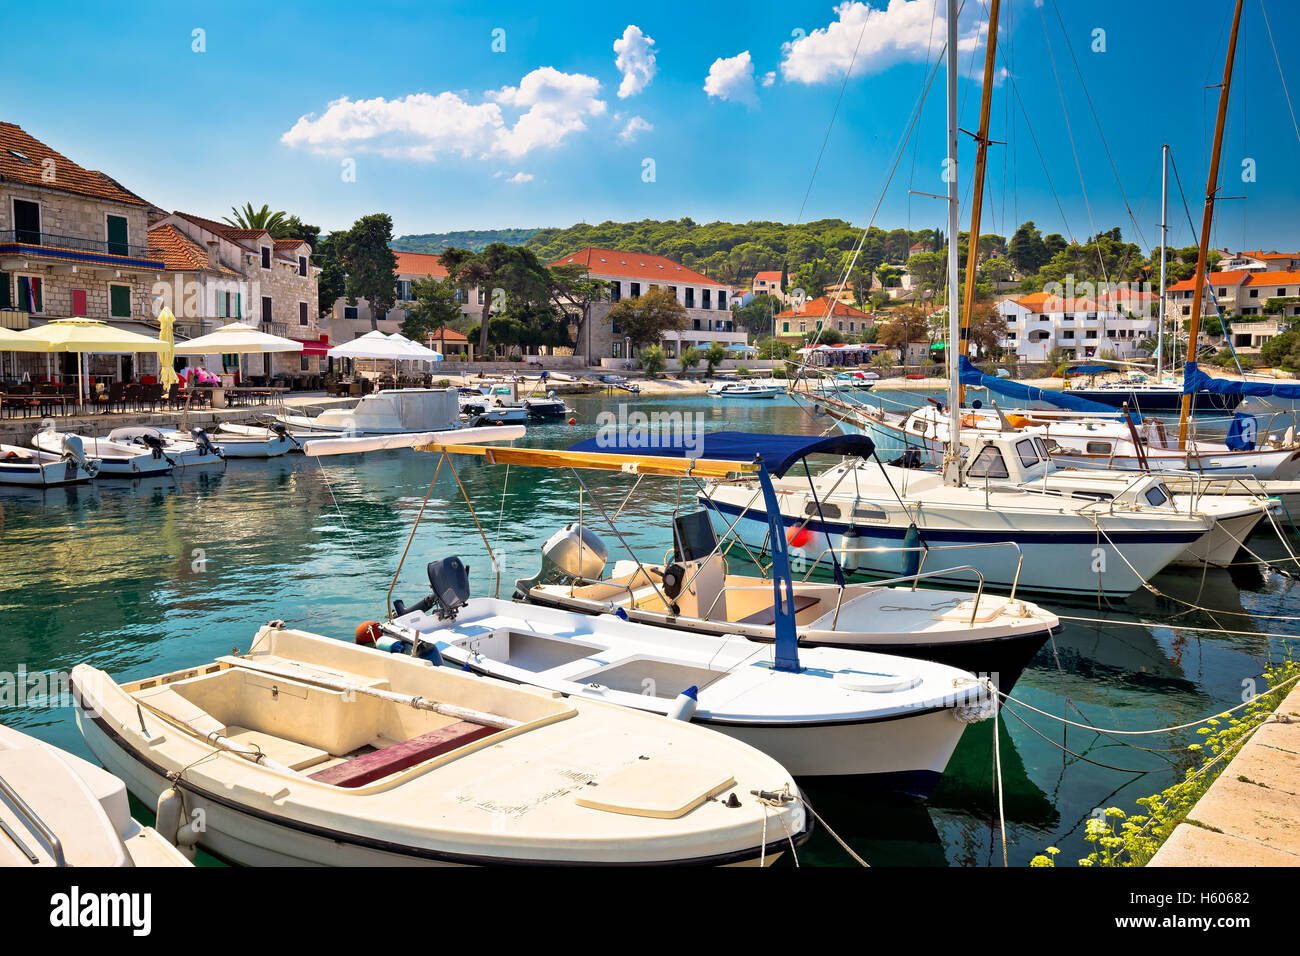 Town of Sumartin seafront view, island of Brac, Dalmatia, Croatia Stock Photo